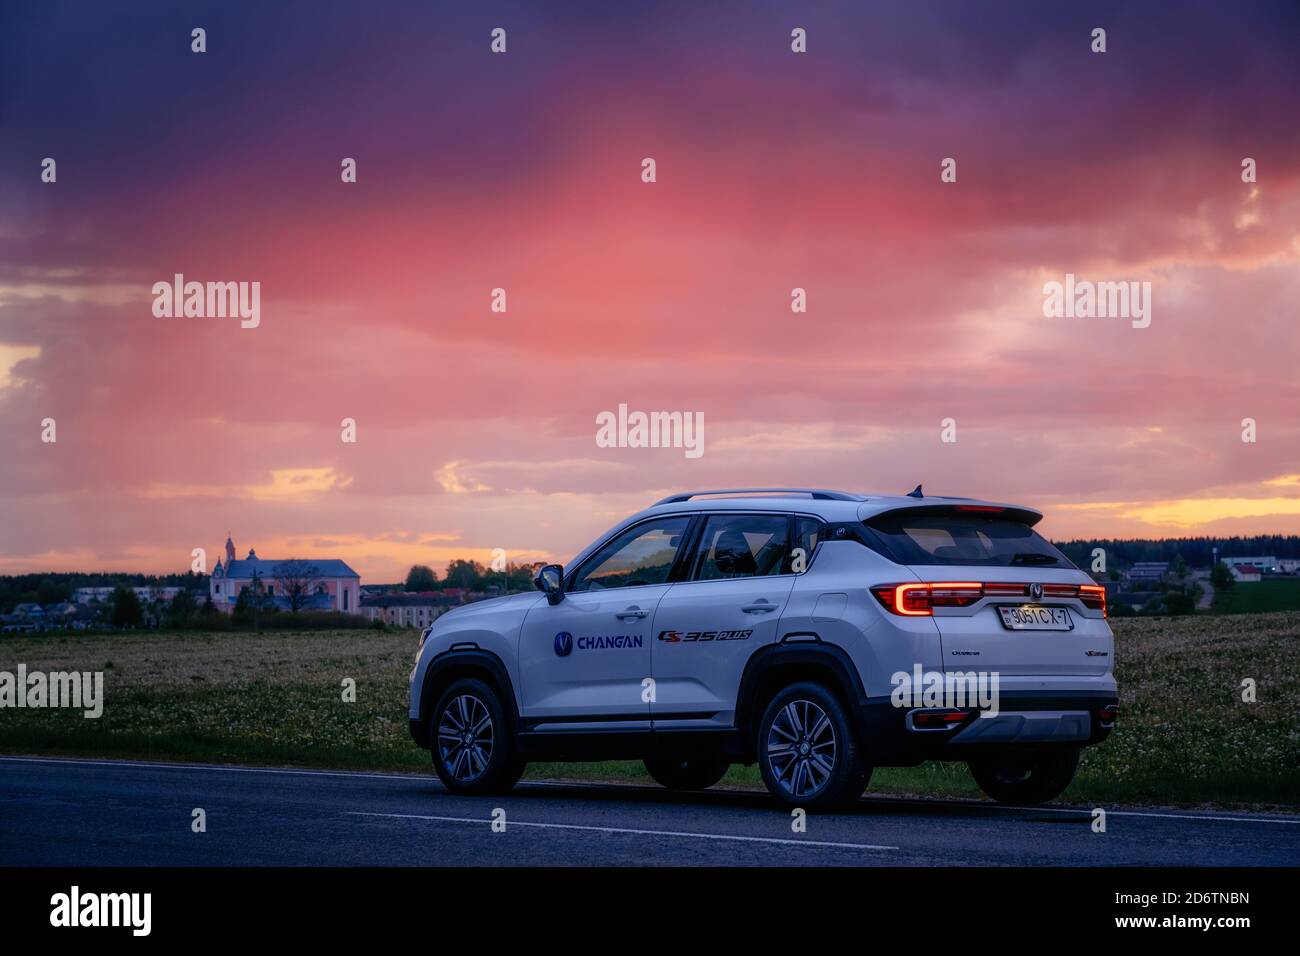 Kreva, Belarus - June 1, 2020: Changan cs35 Plus is parked on road at sunset Stock Photo